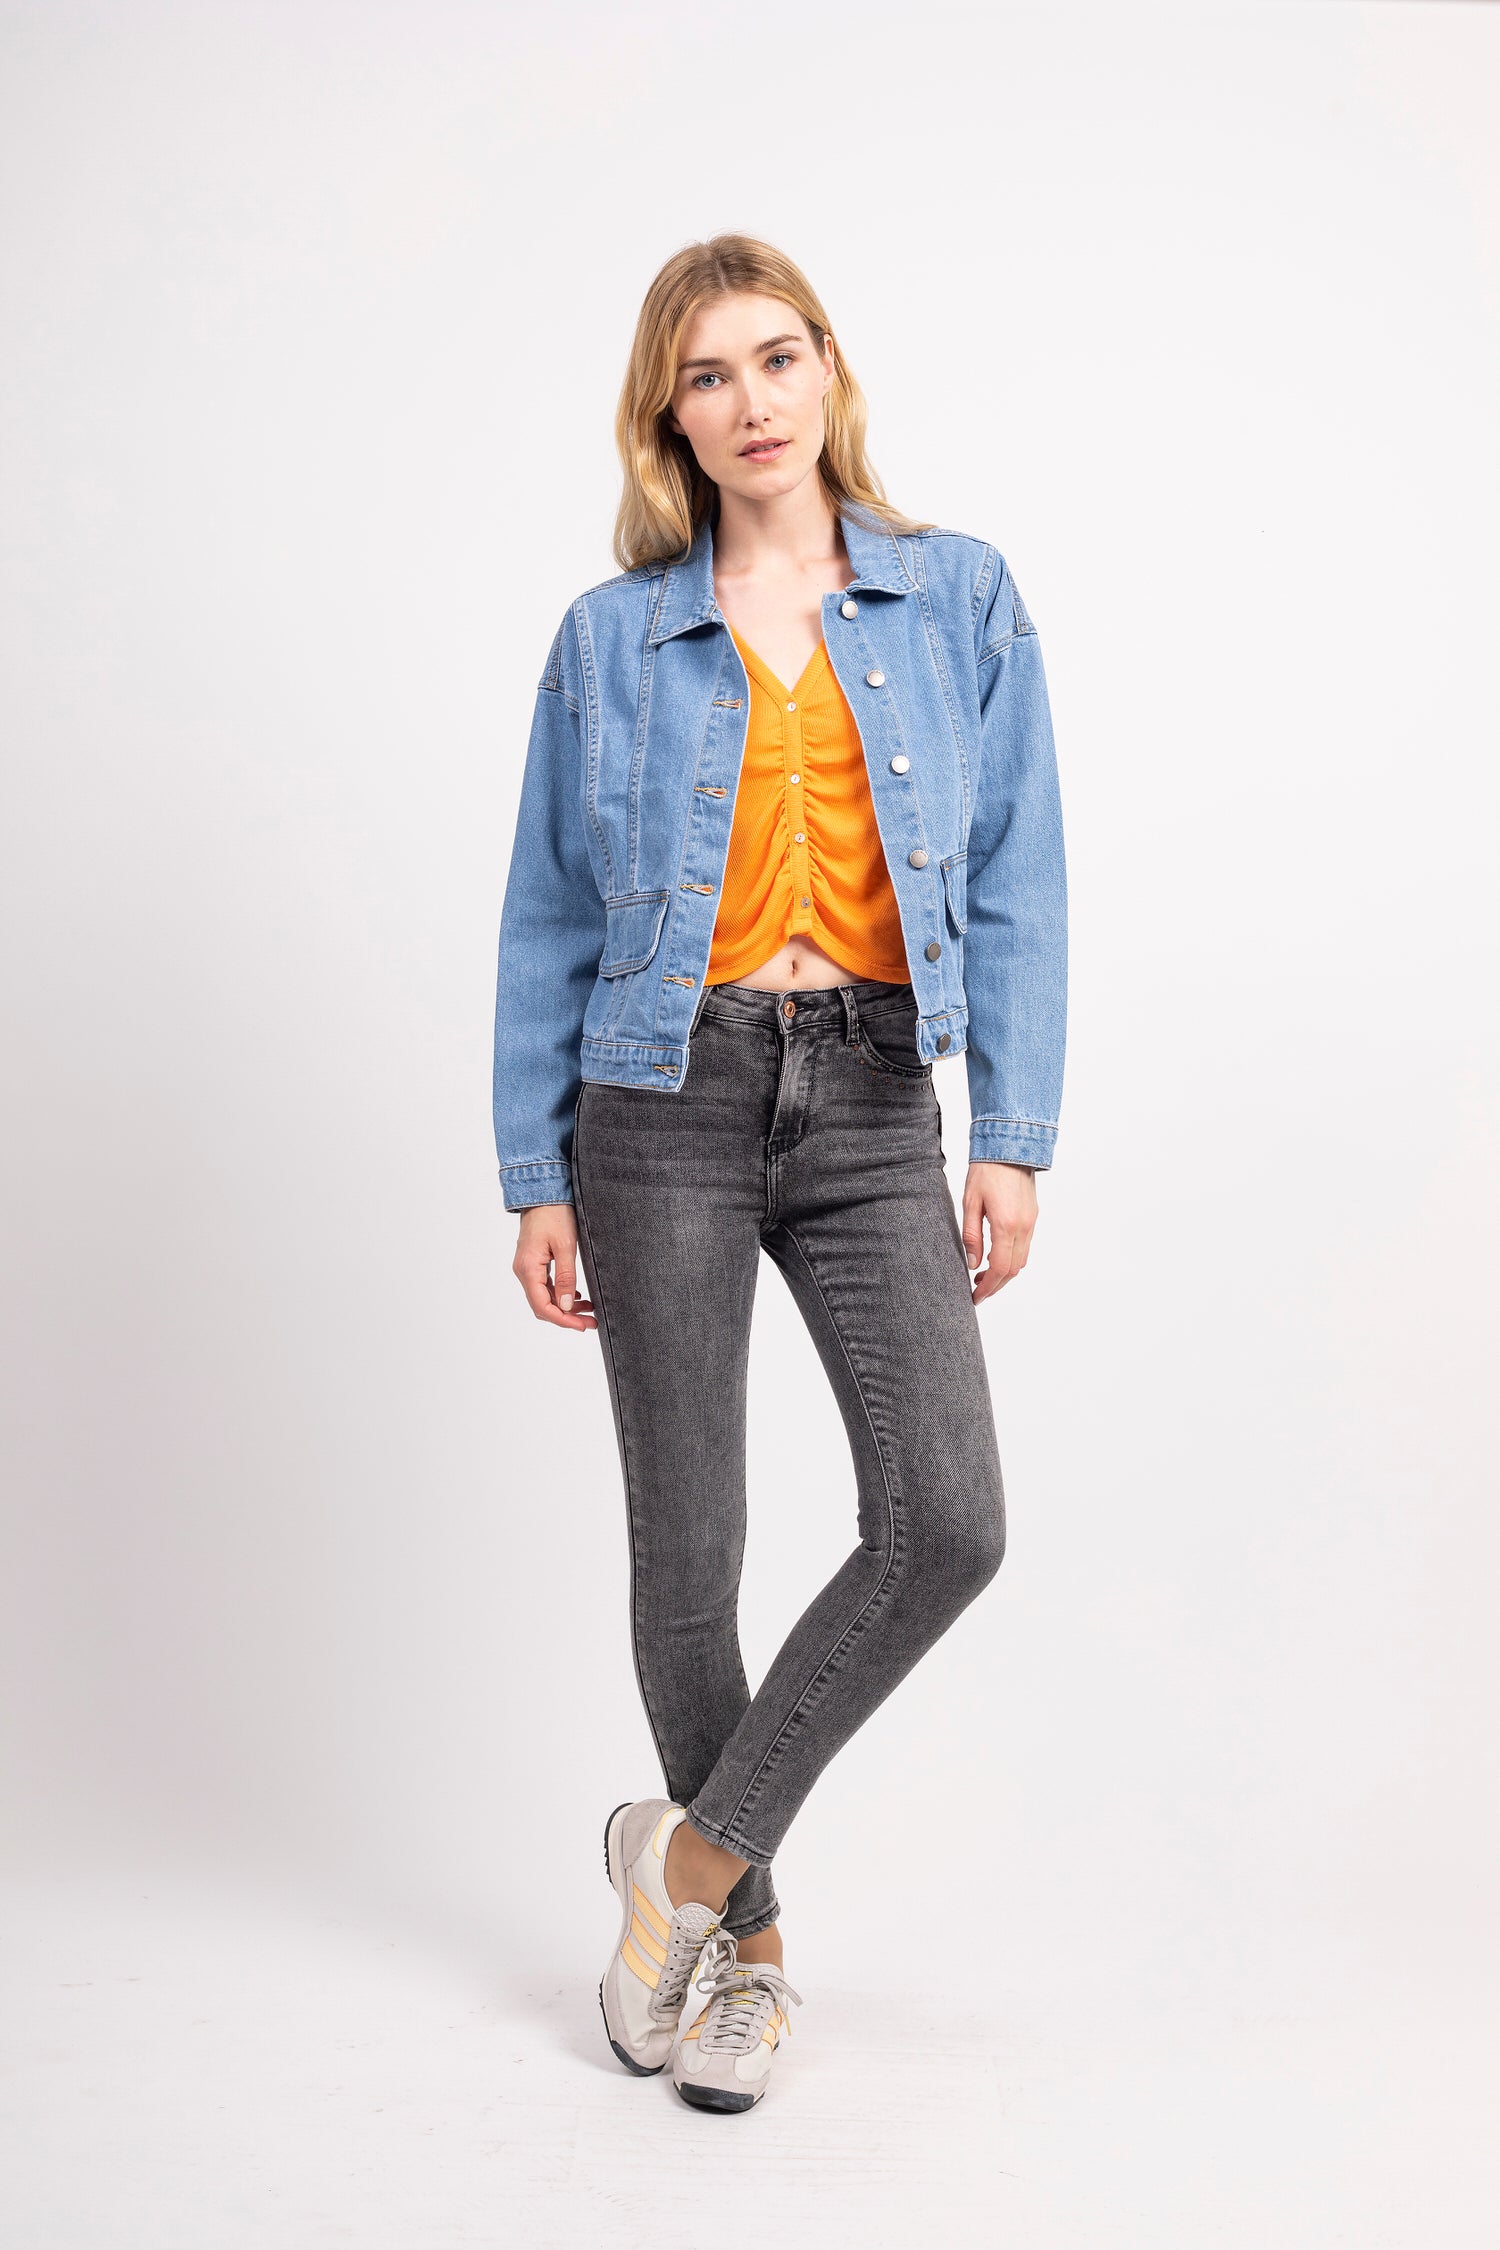 Poche Detail jeans jas - Manel